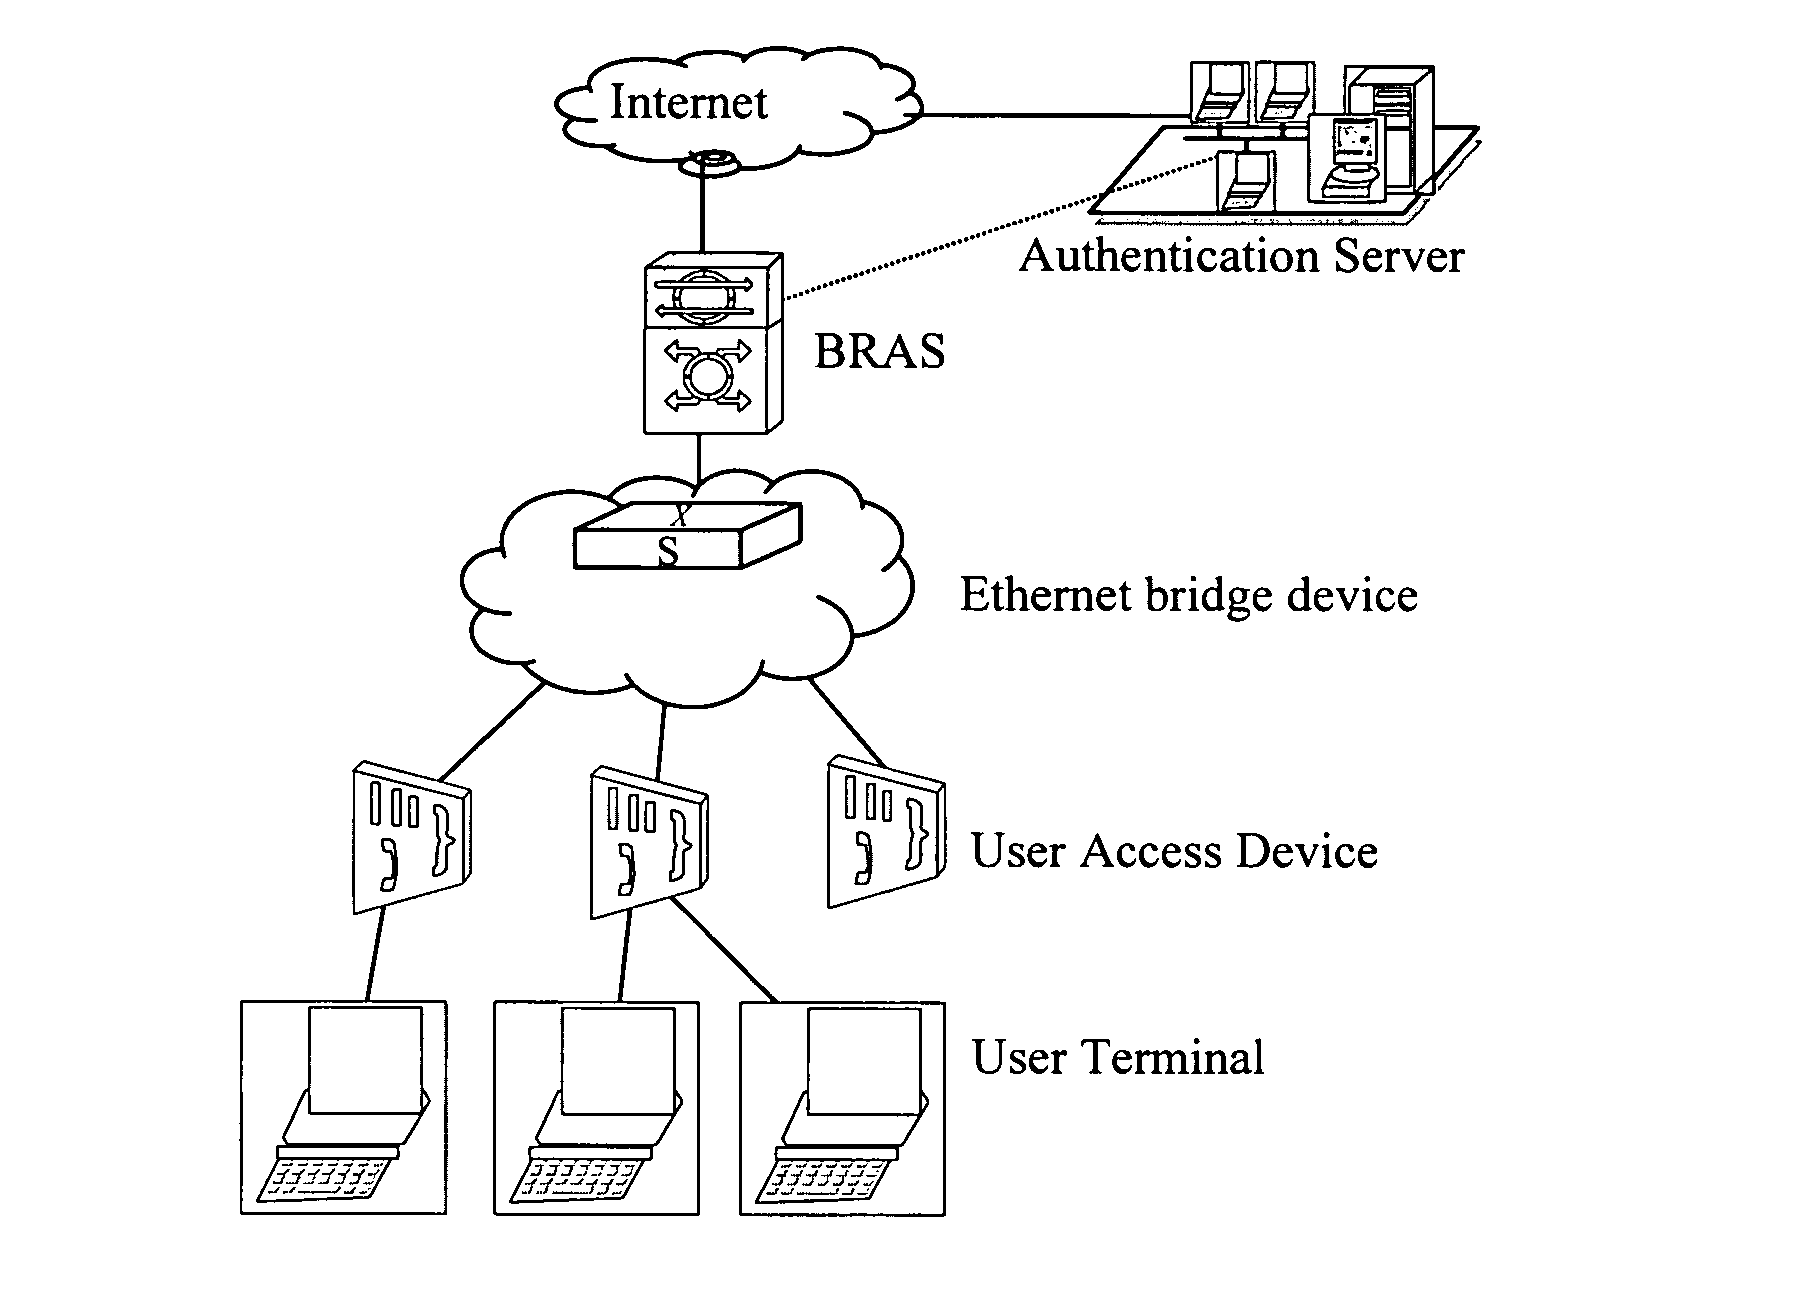 VLAN-based data packet transmission and ethernet bridge device